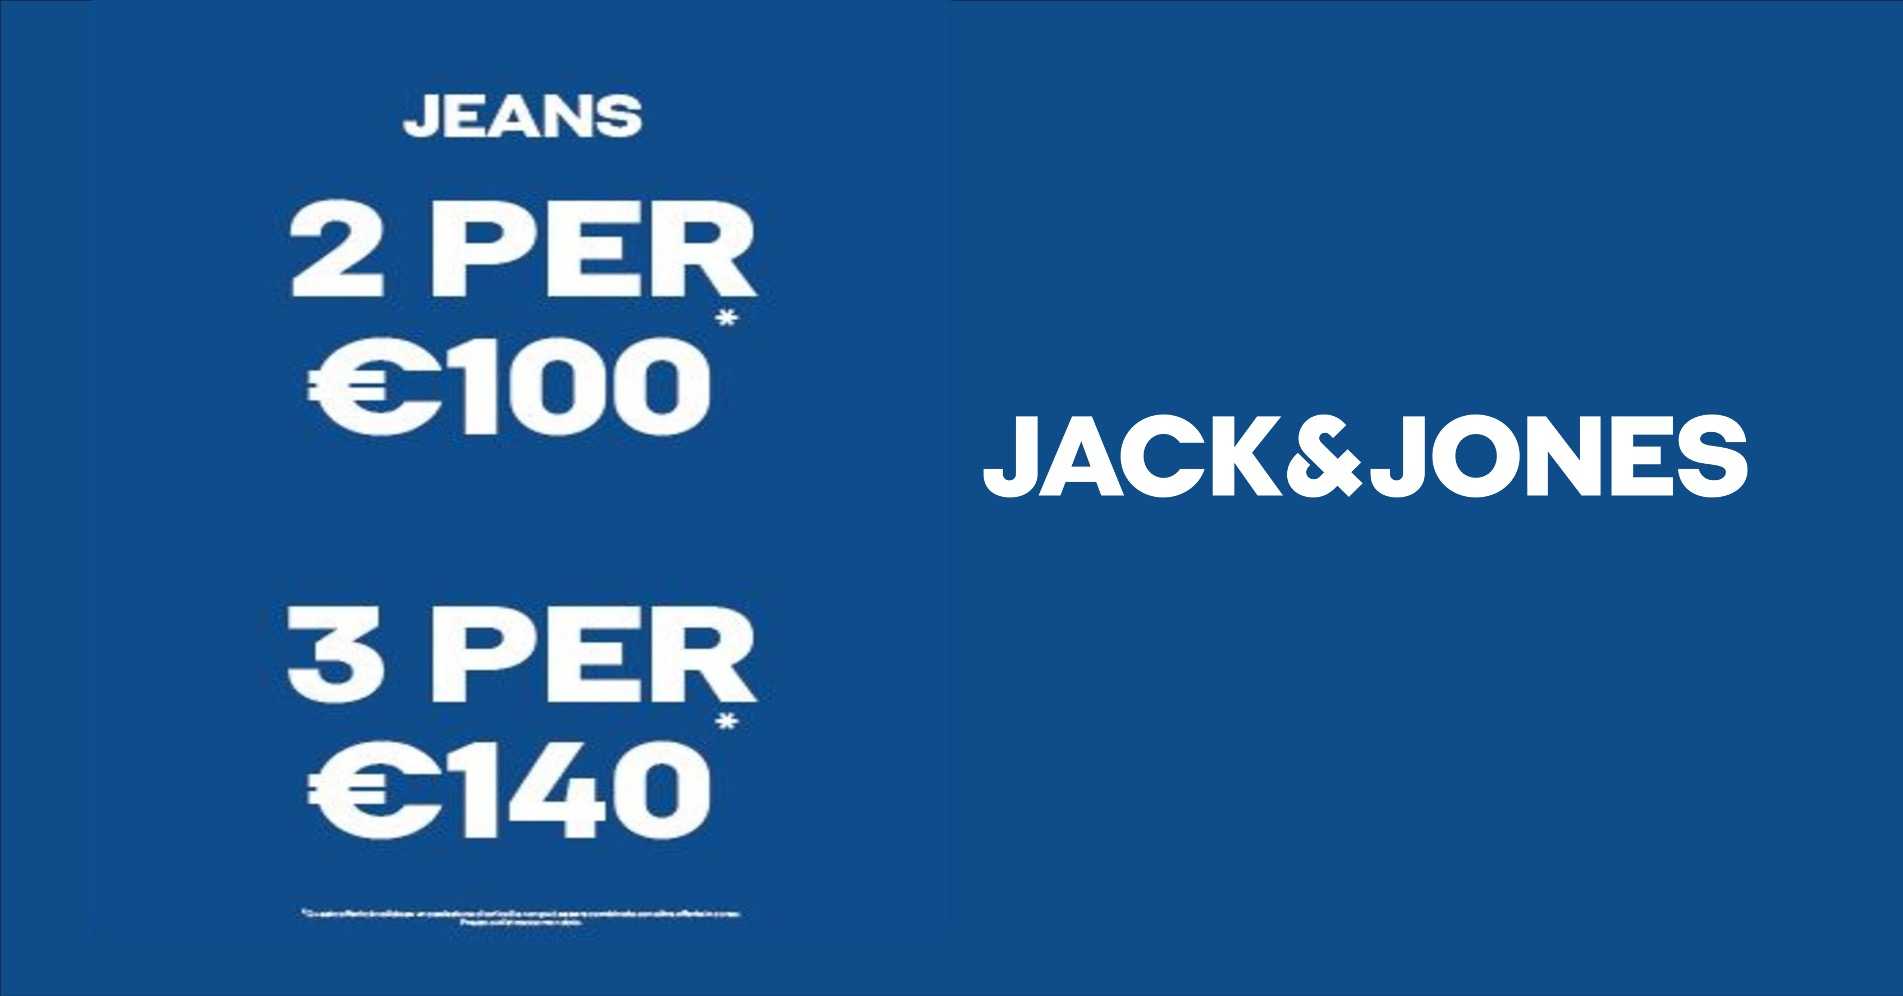 JACK & JONES Promo jeans